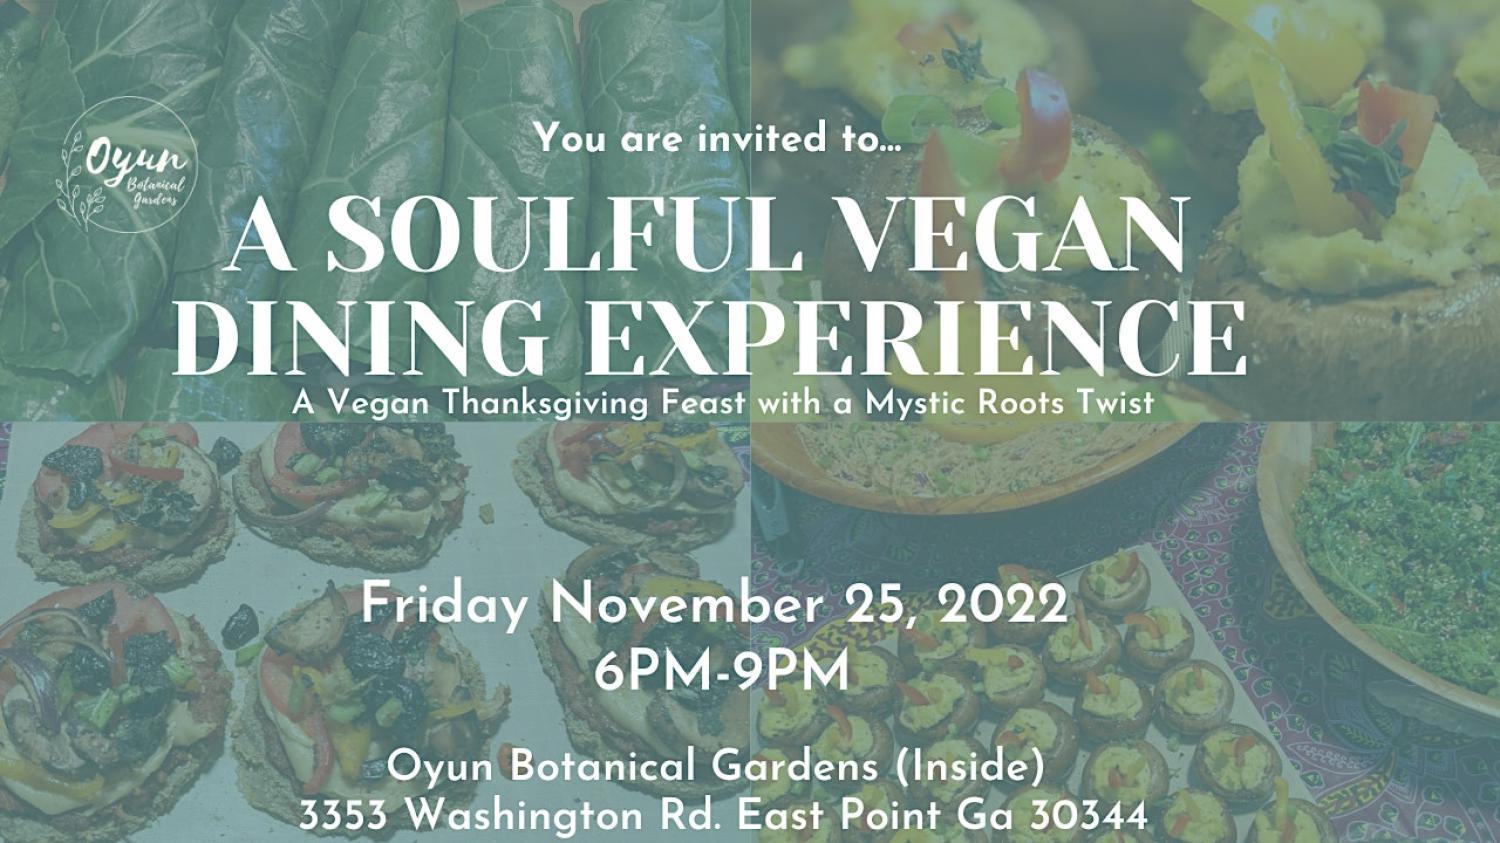 A Soulful Vegan Feast with Mystic Roots
Fri Nov 25, 6:00 PM - Fri Nov 25, 9:00 PM
in 41 days